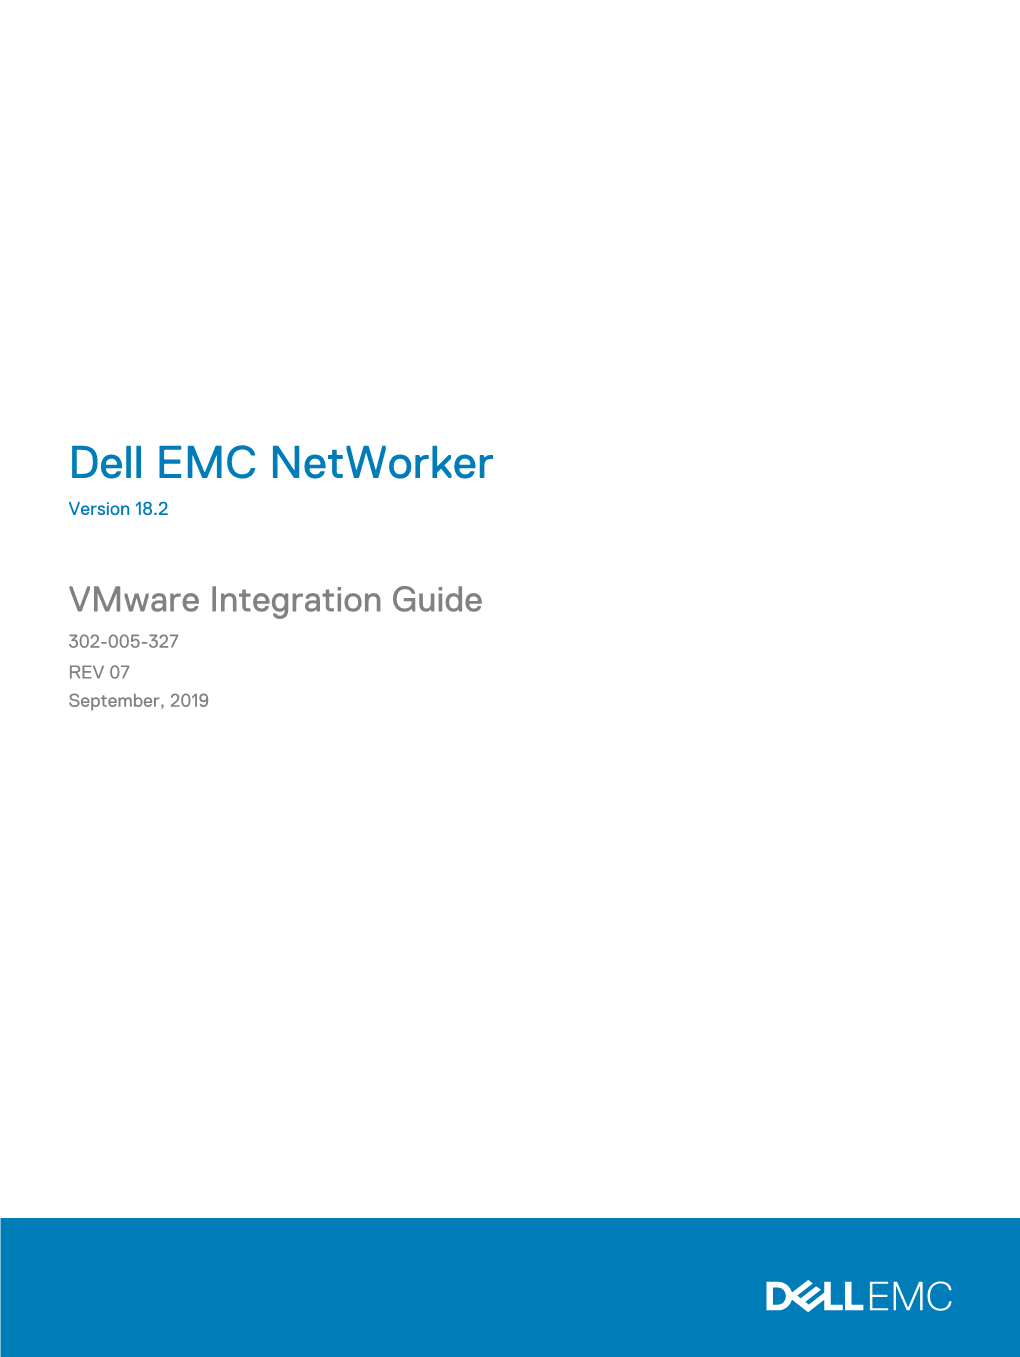 Dell EMC Networker Vmware Integration Guide CONTENTS